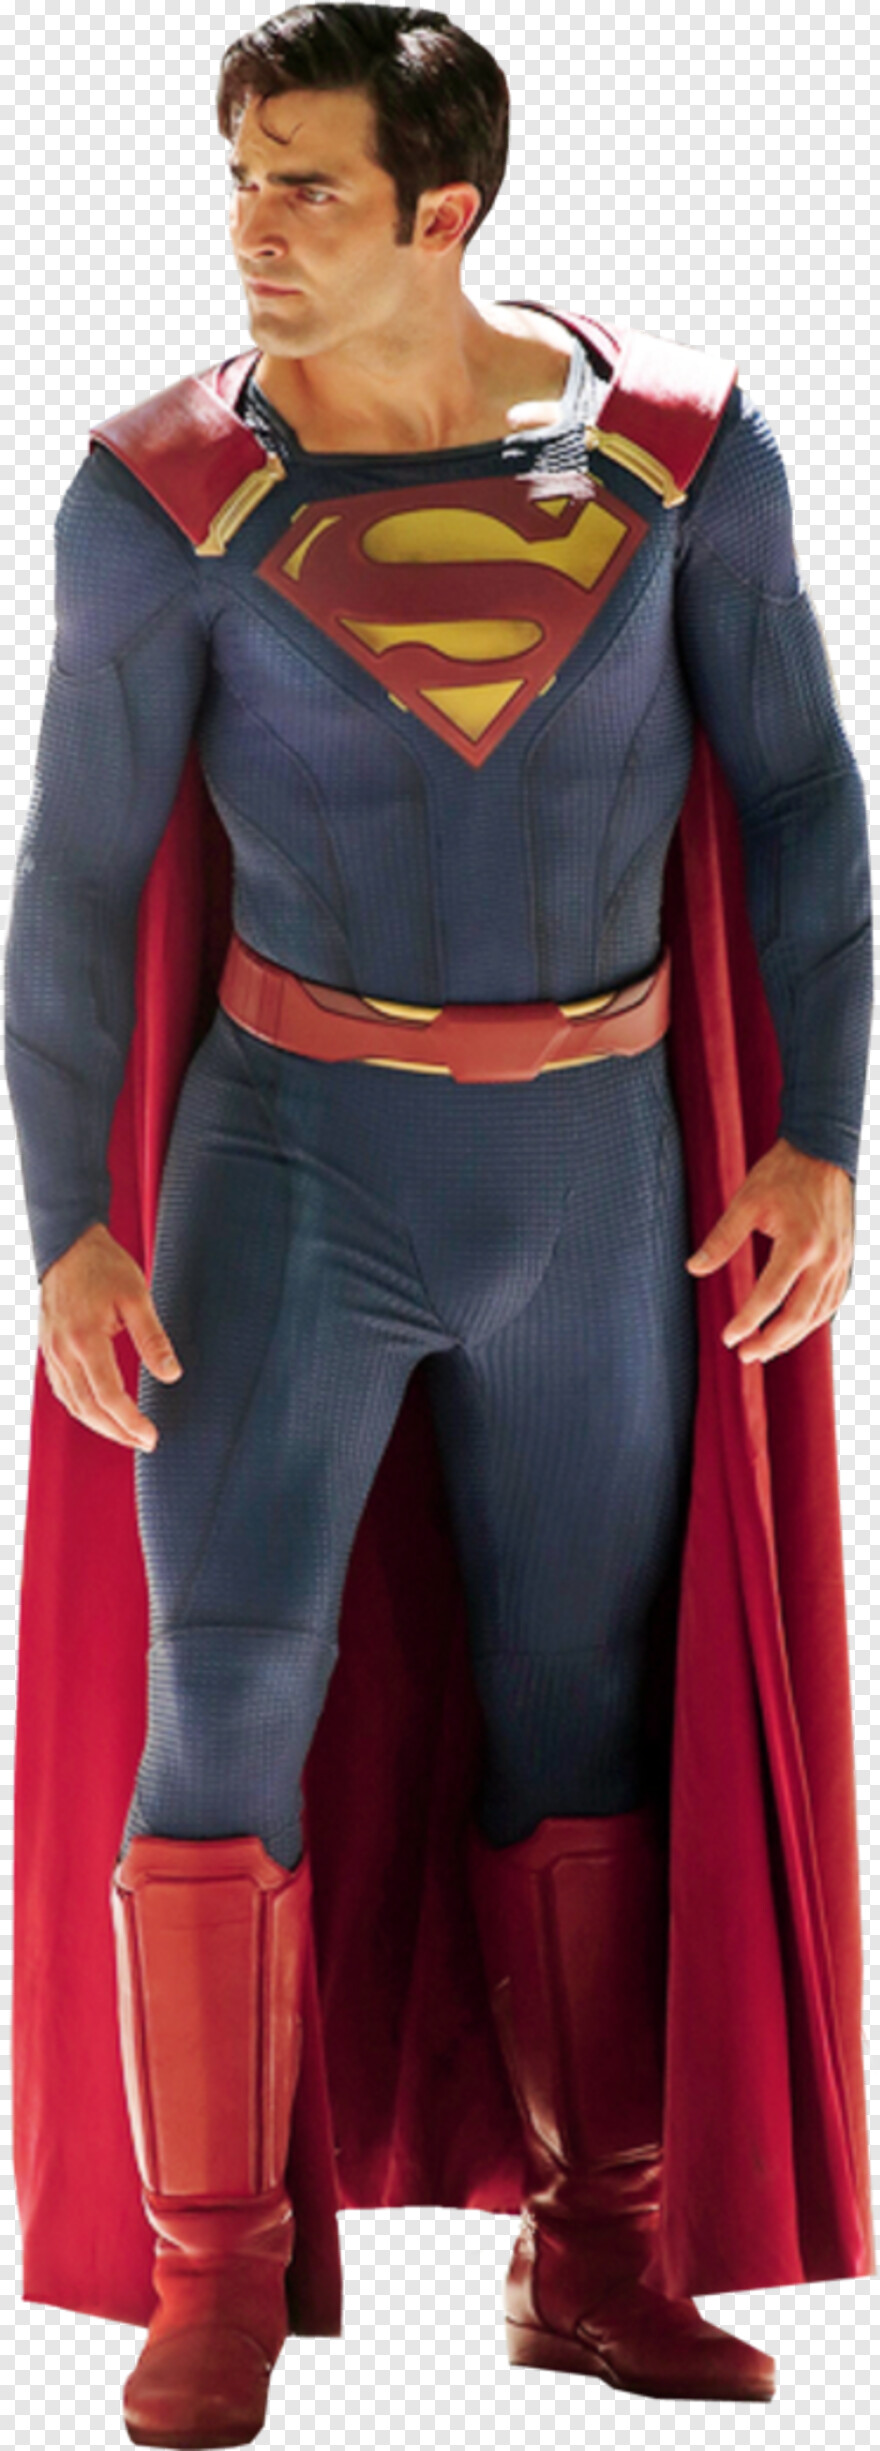 superman # 608104